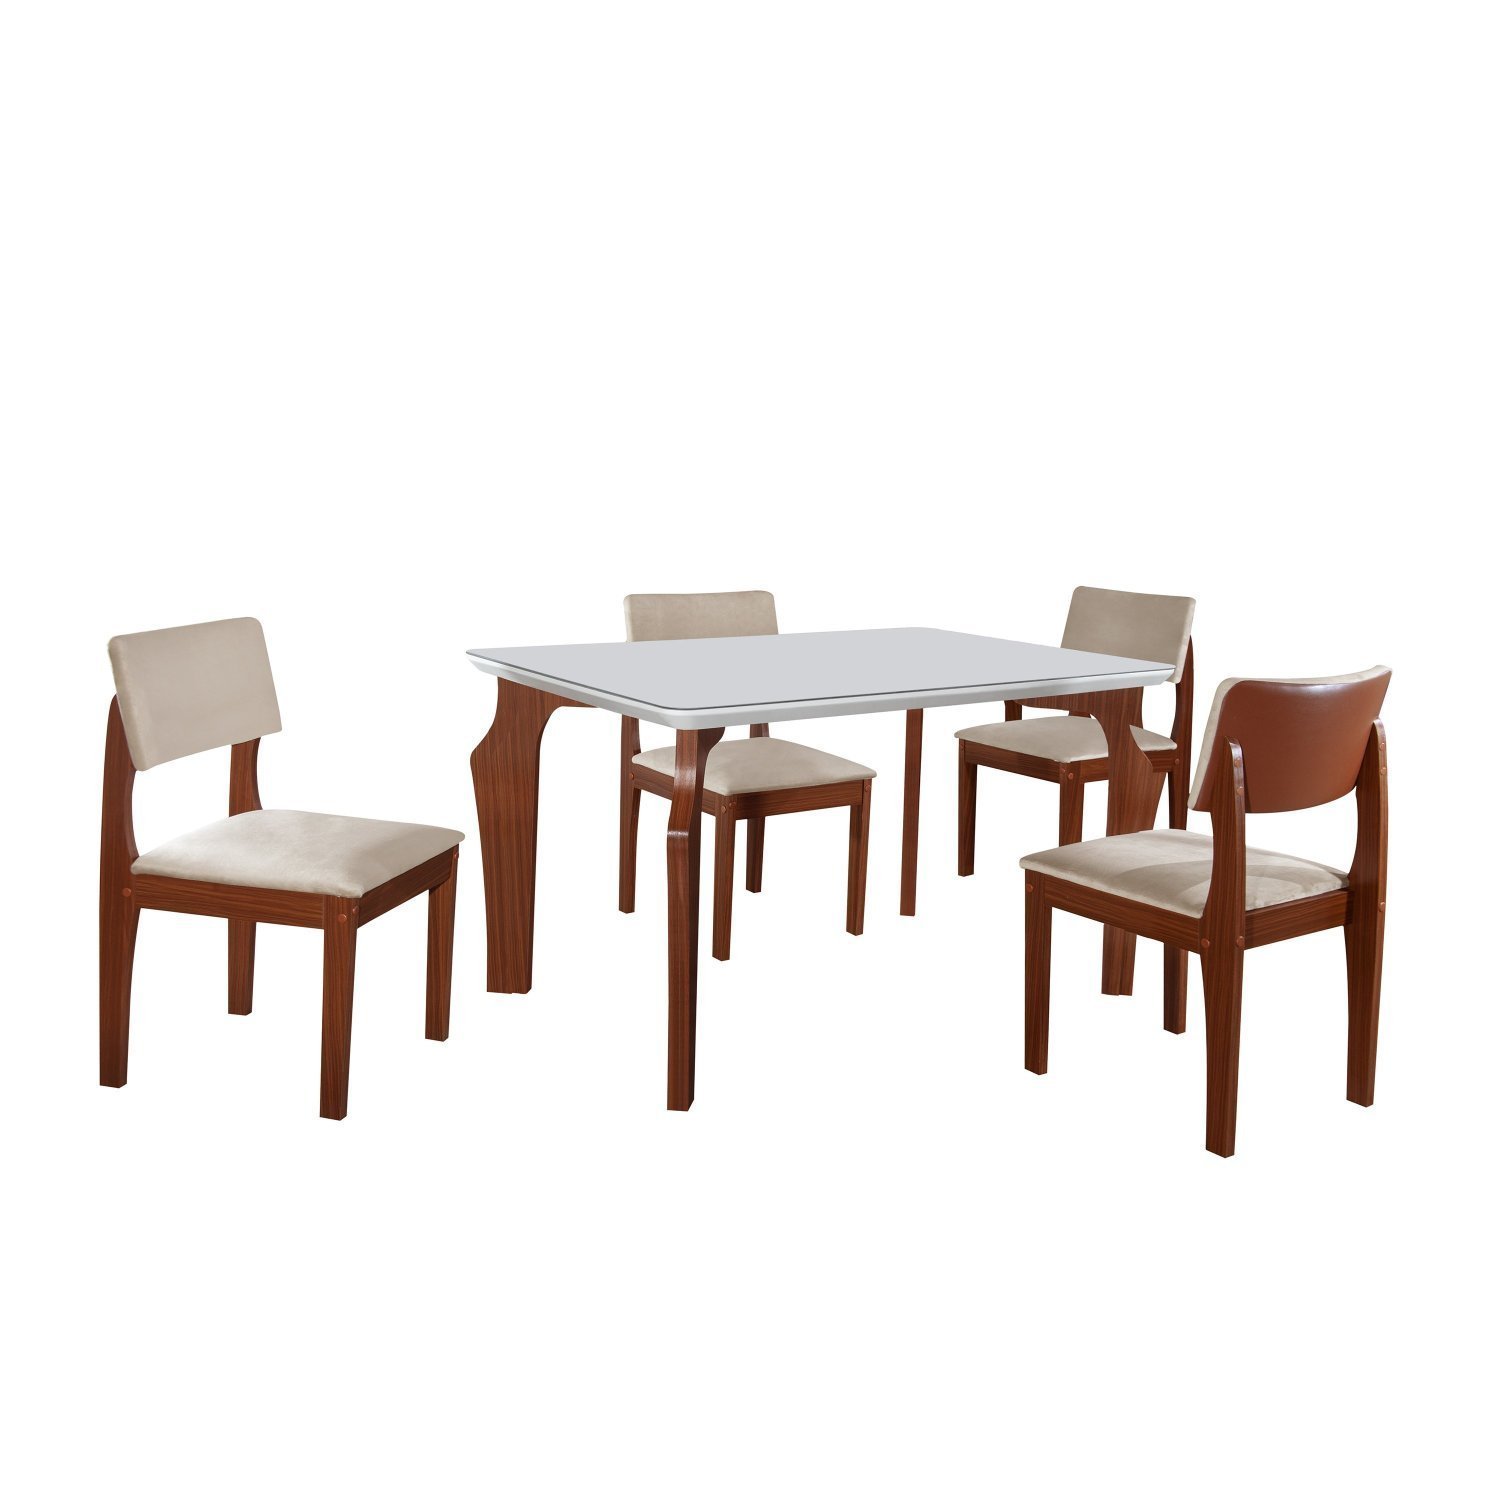 Conjunto de Jantar com 4 Cadeiras Marialice - 2